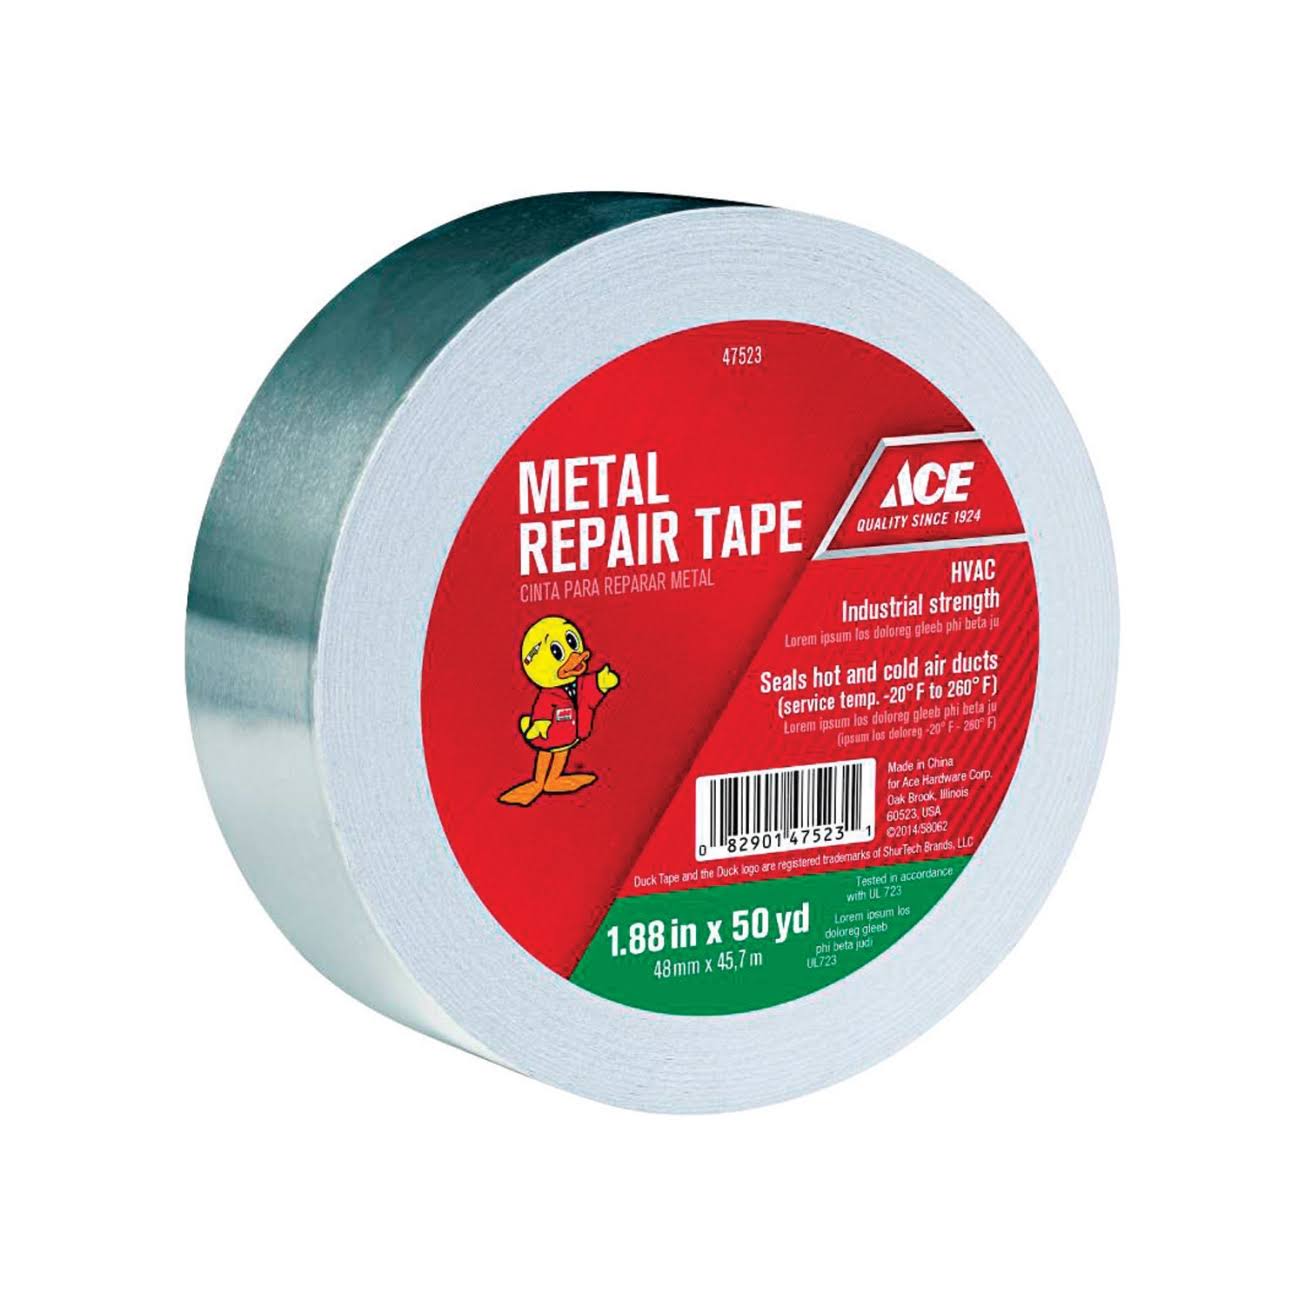 Ace Industrial Strength Metal Repair Tape - Silver, 45.72m